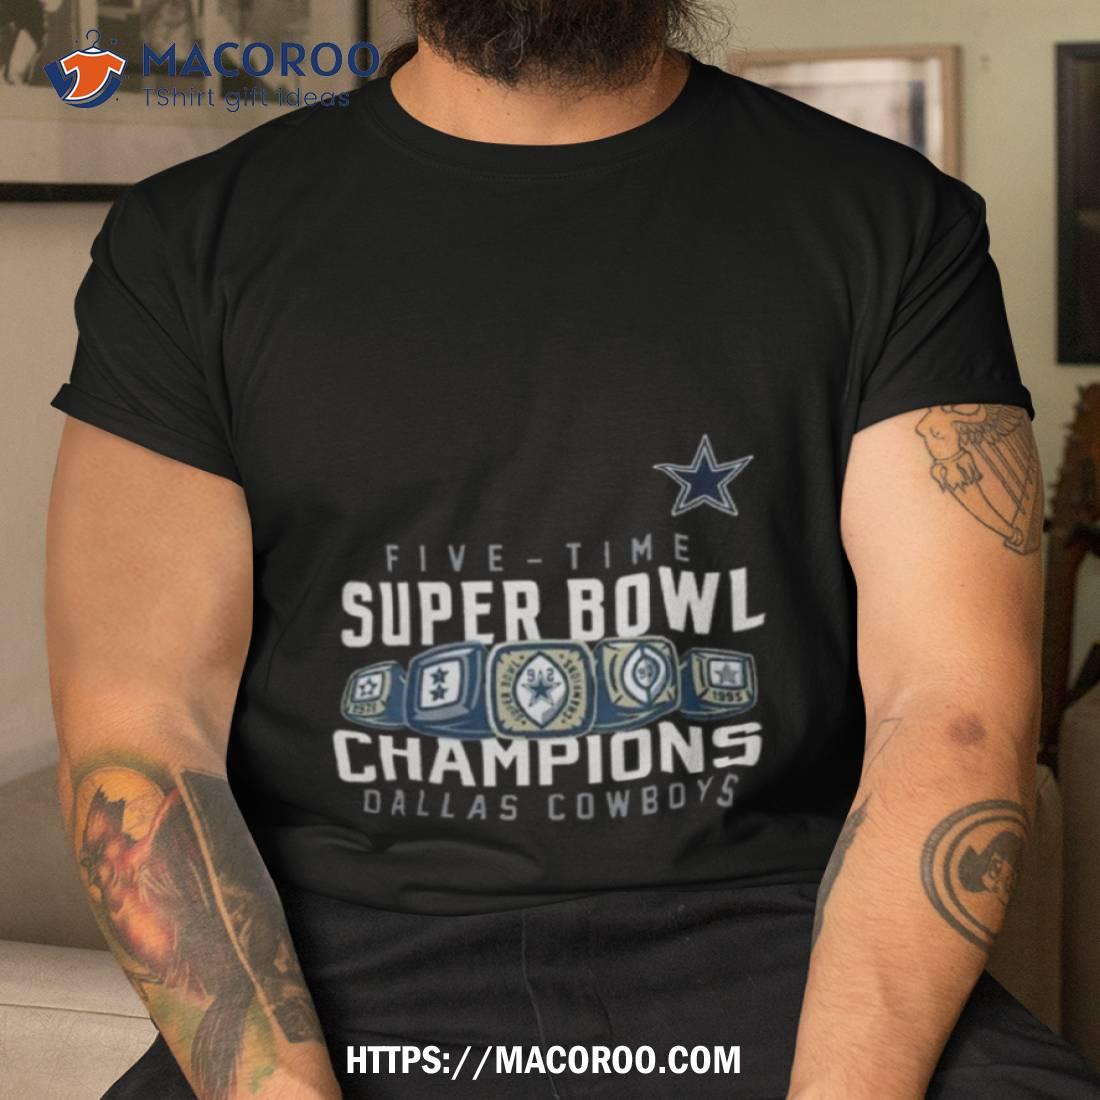 super bowl shirts